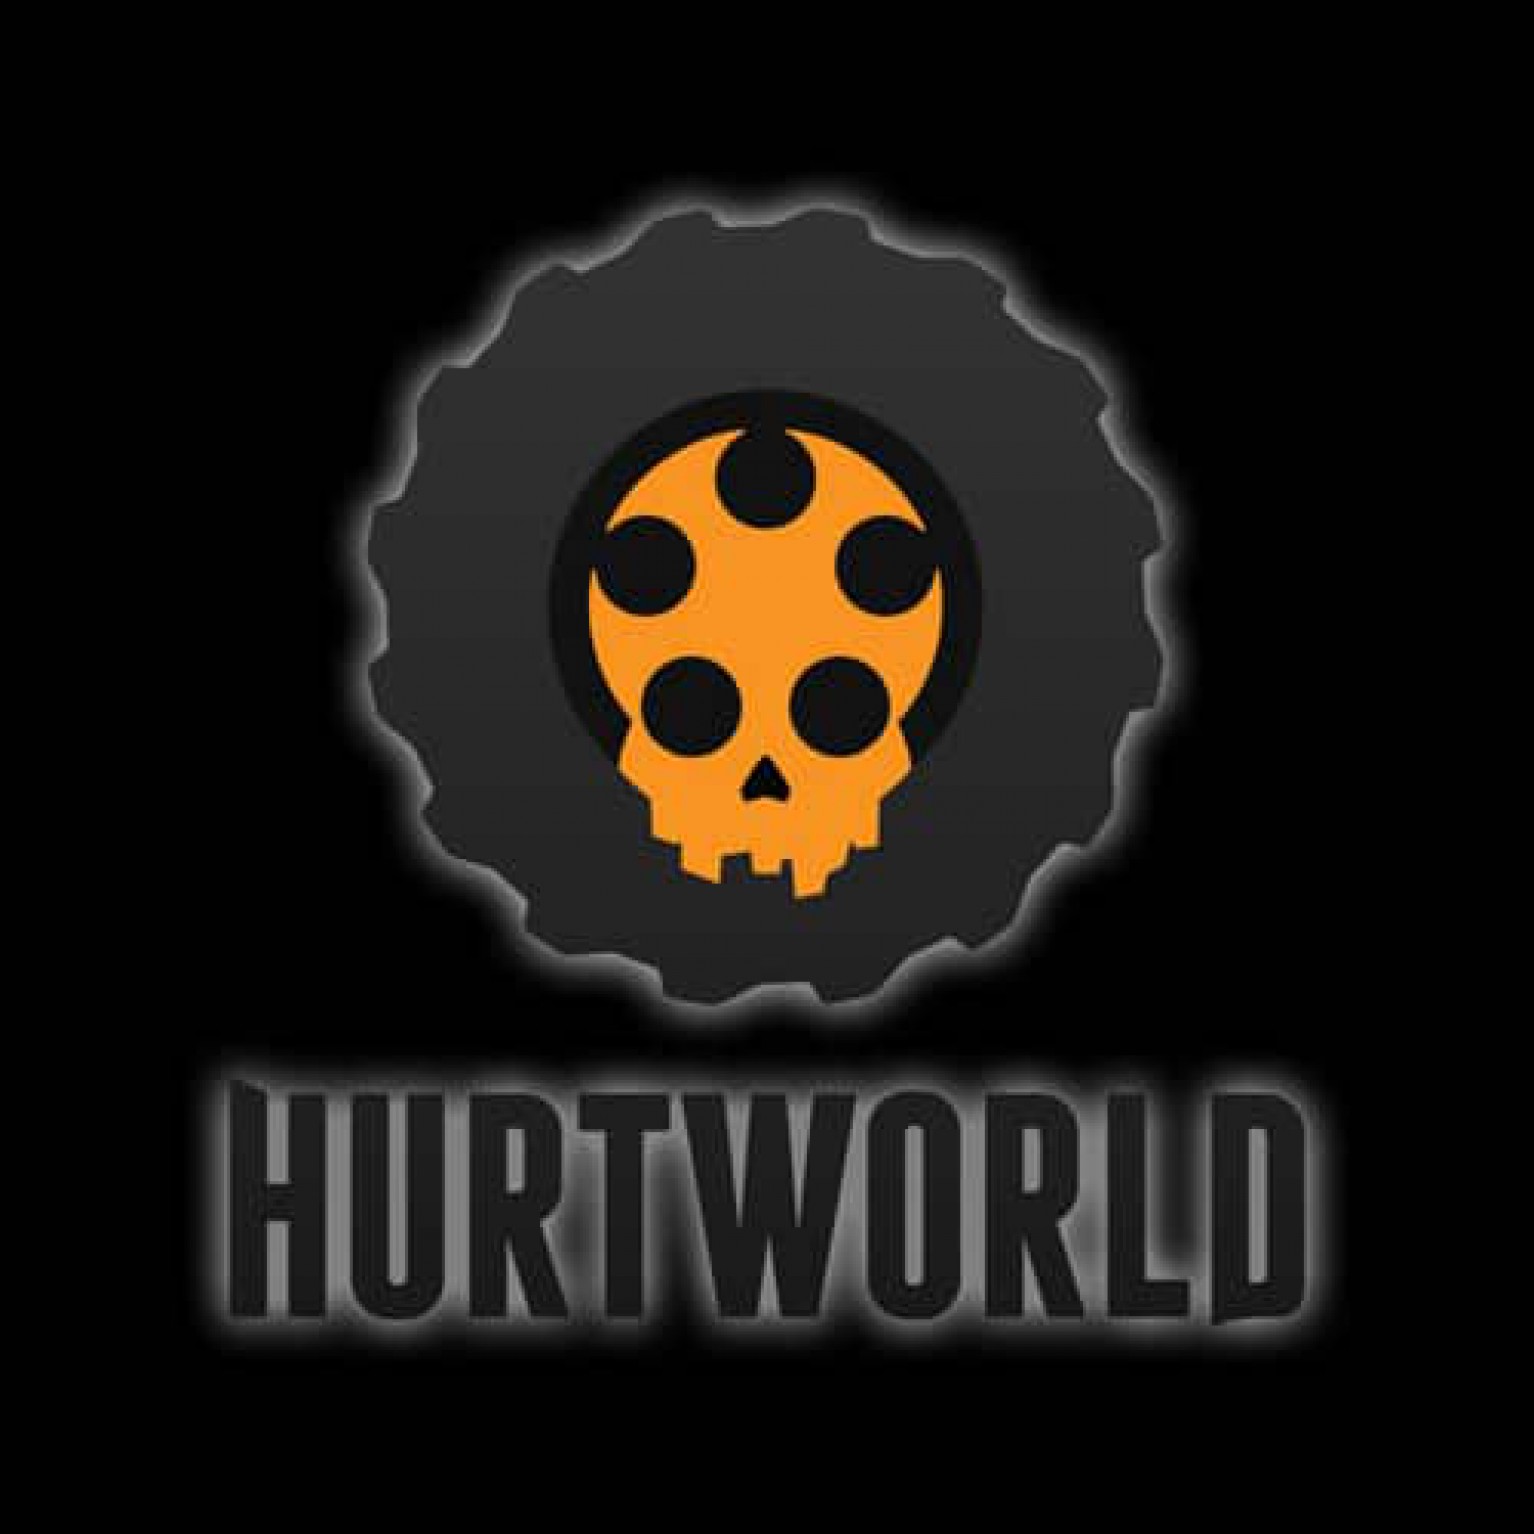 Hurtworld steam chart фото 49